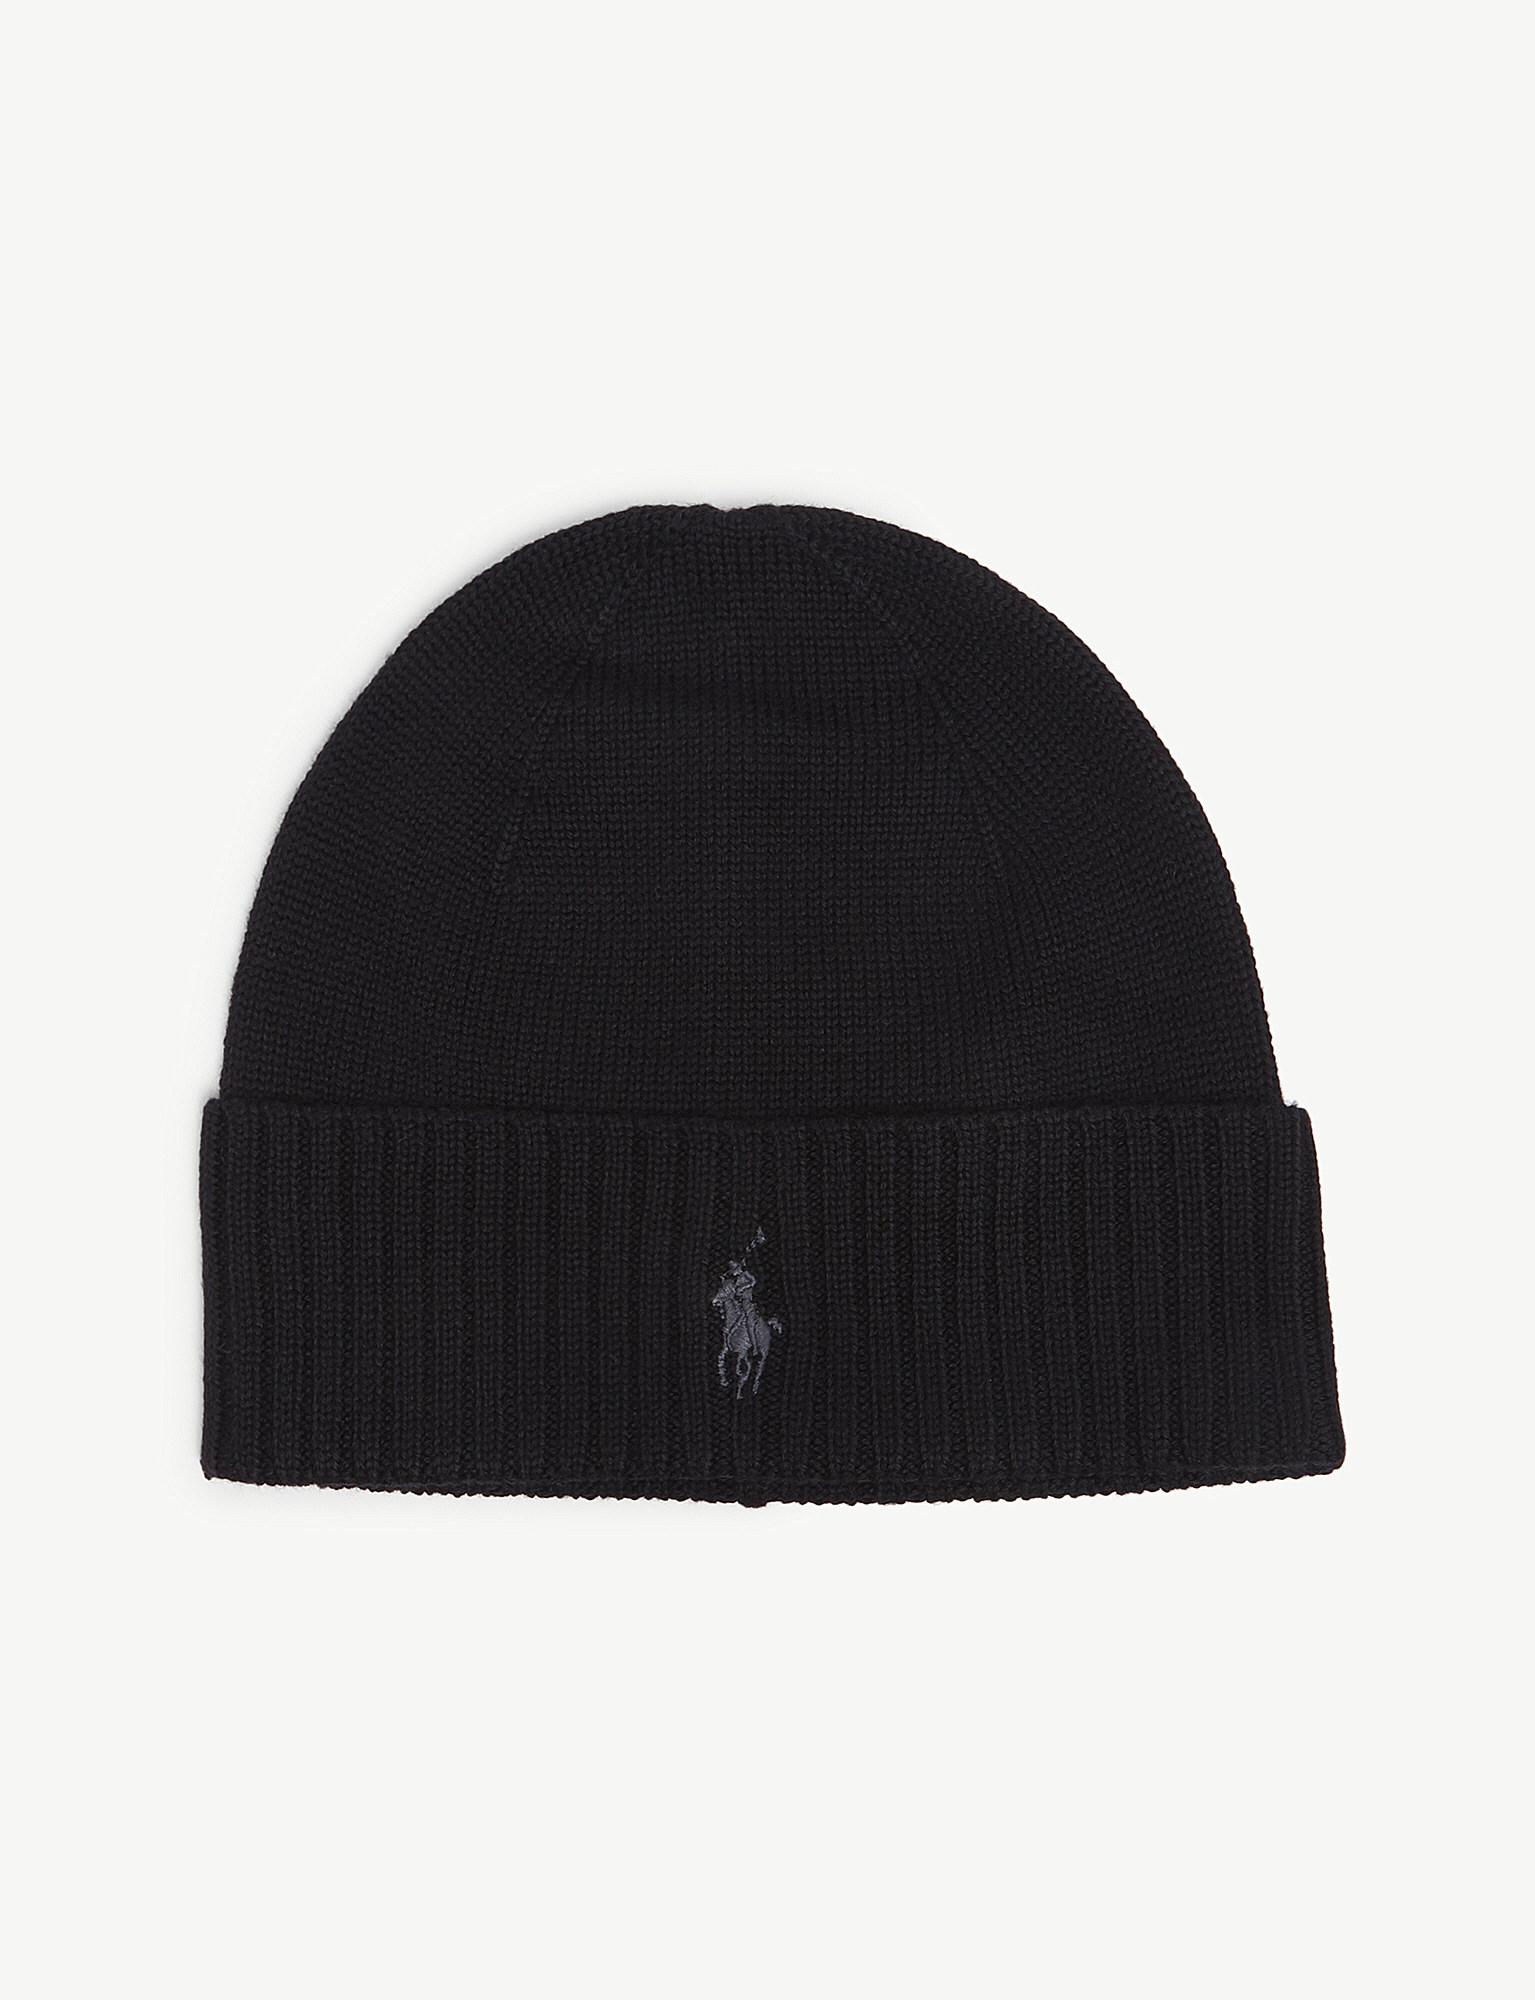 Ralph Lauren Polo Beanie Hat Wool Black Latvia, SAVE 52% - fearthemecca.com